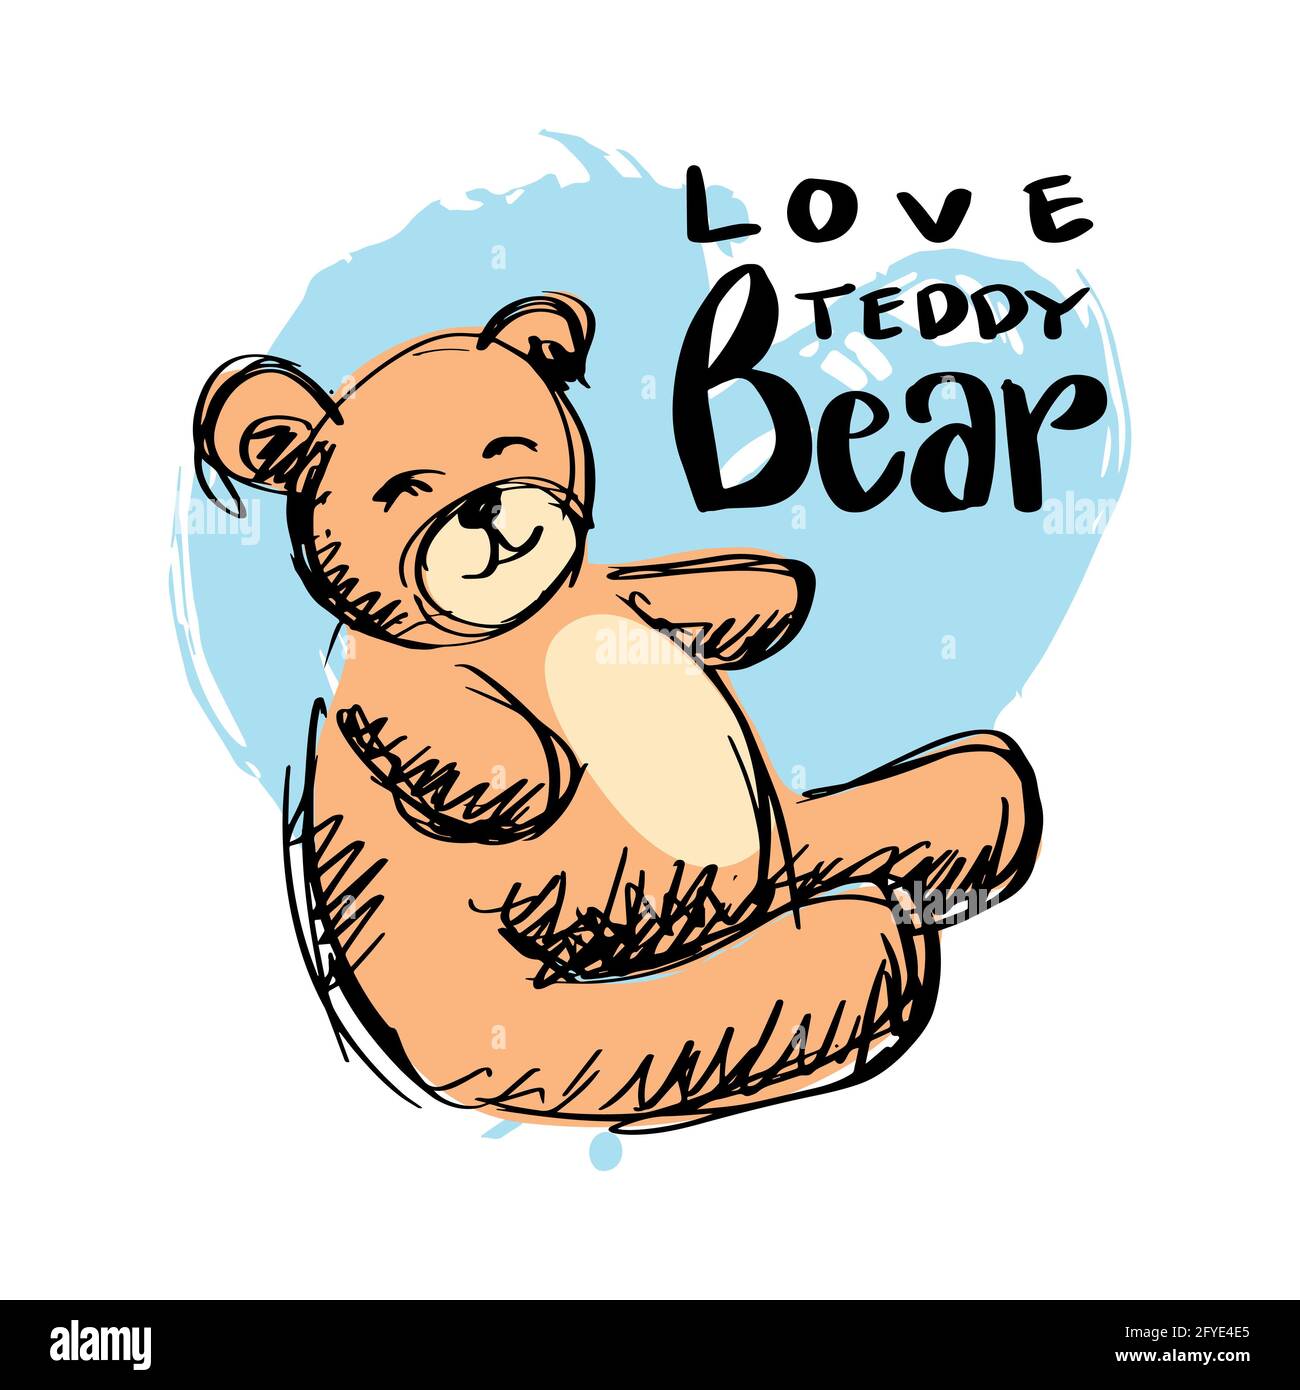 How to Draw a Teddy Bear  Nil Tech  shopniltech